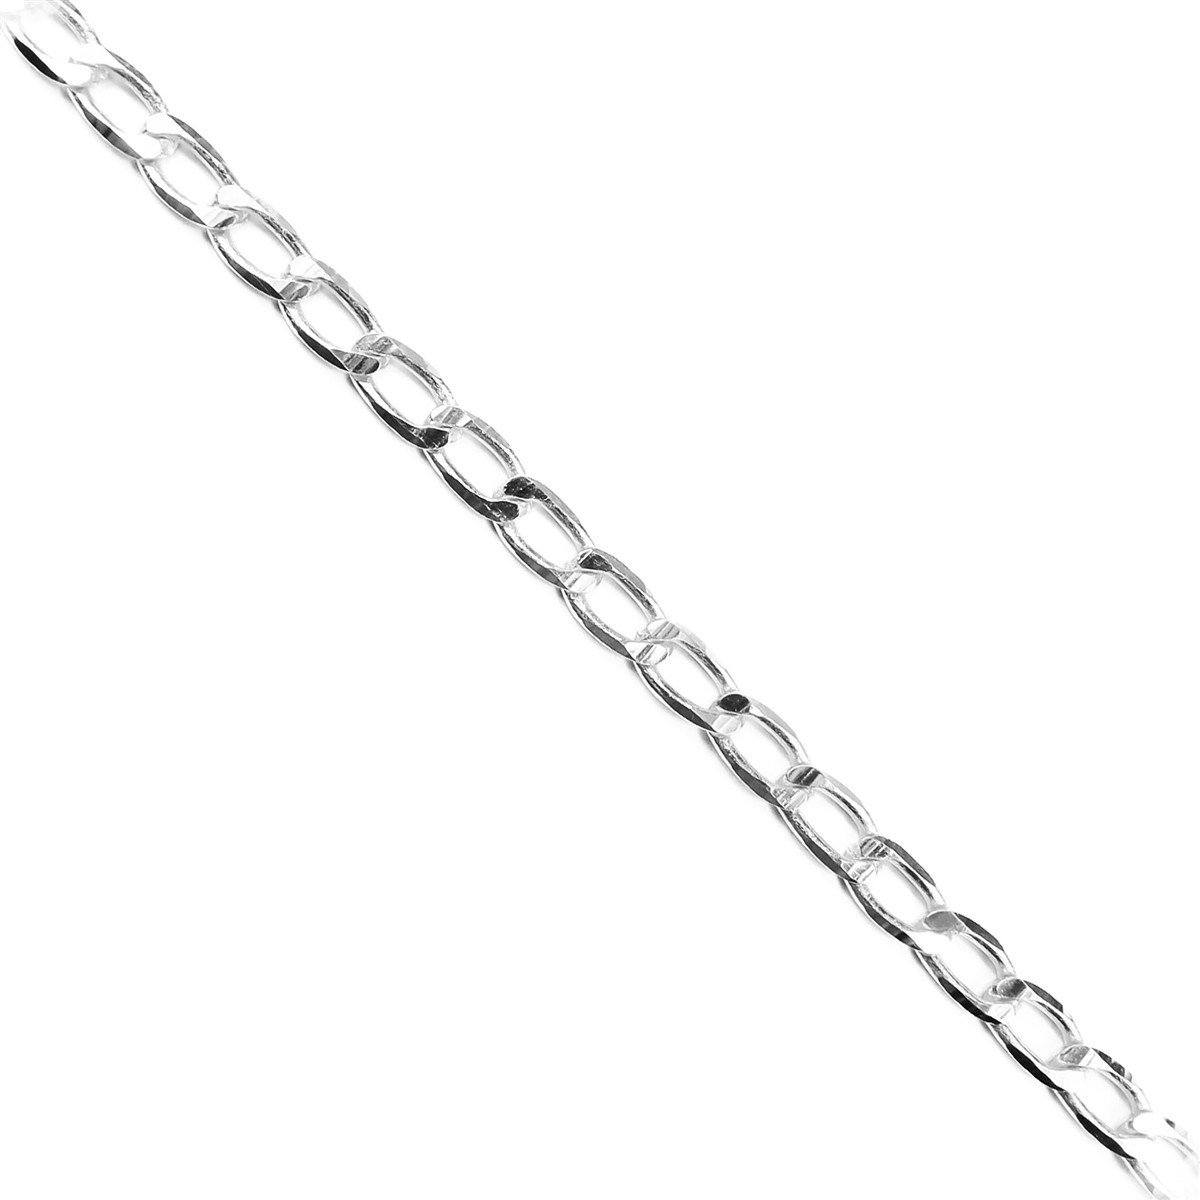 Extender Chain 8cm Silver